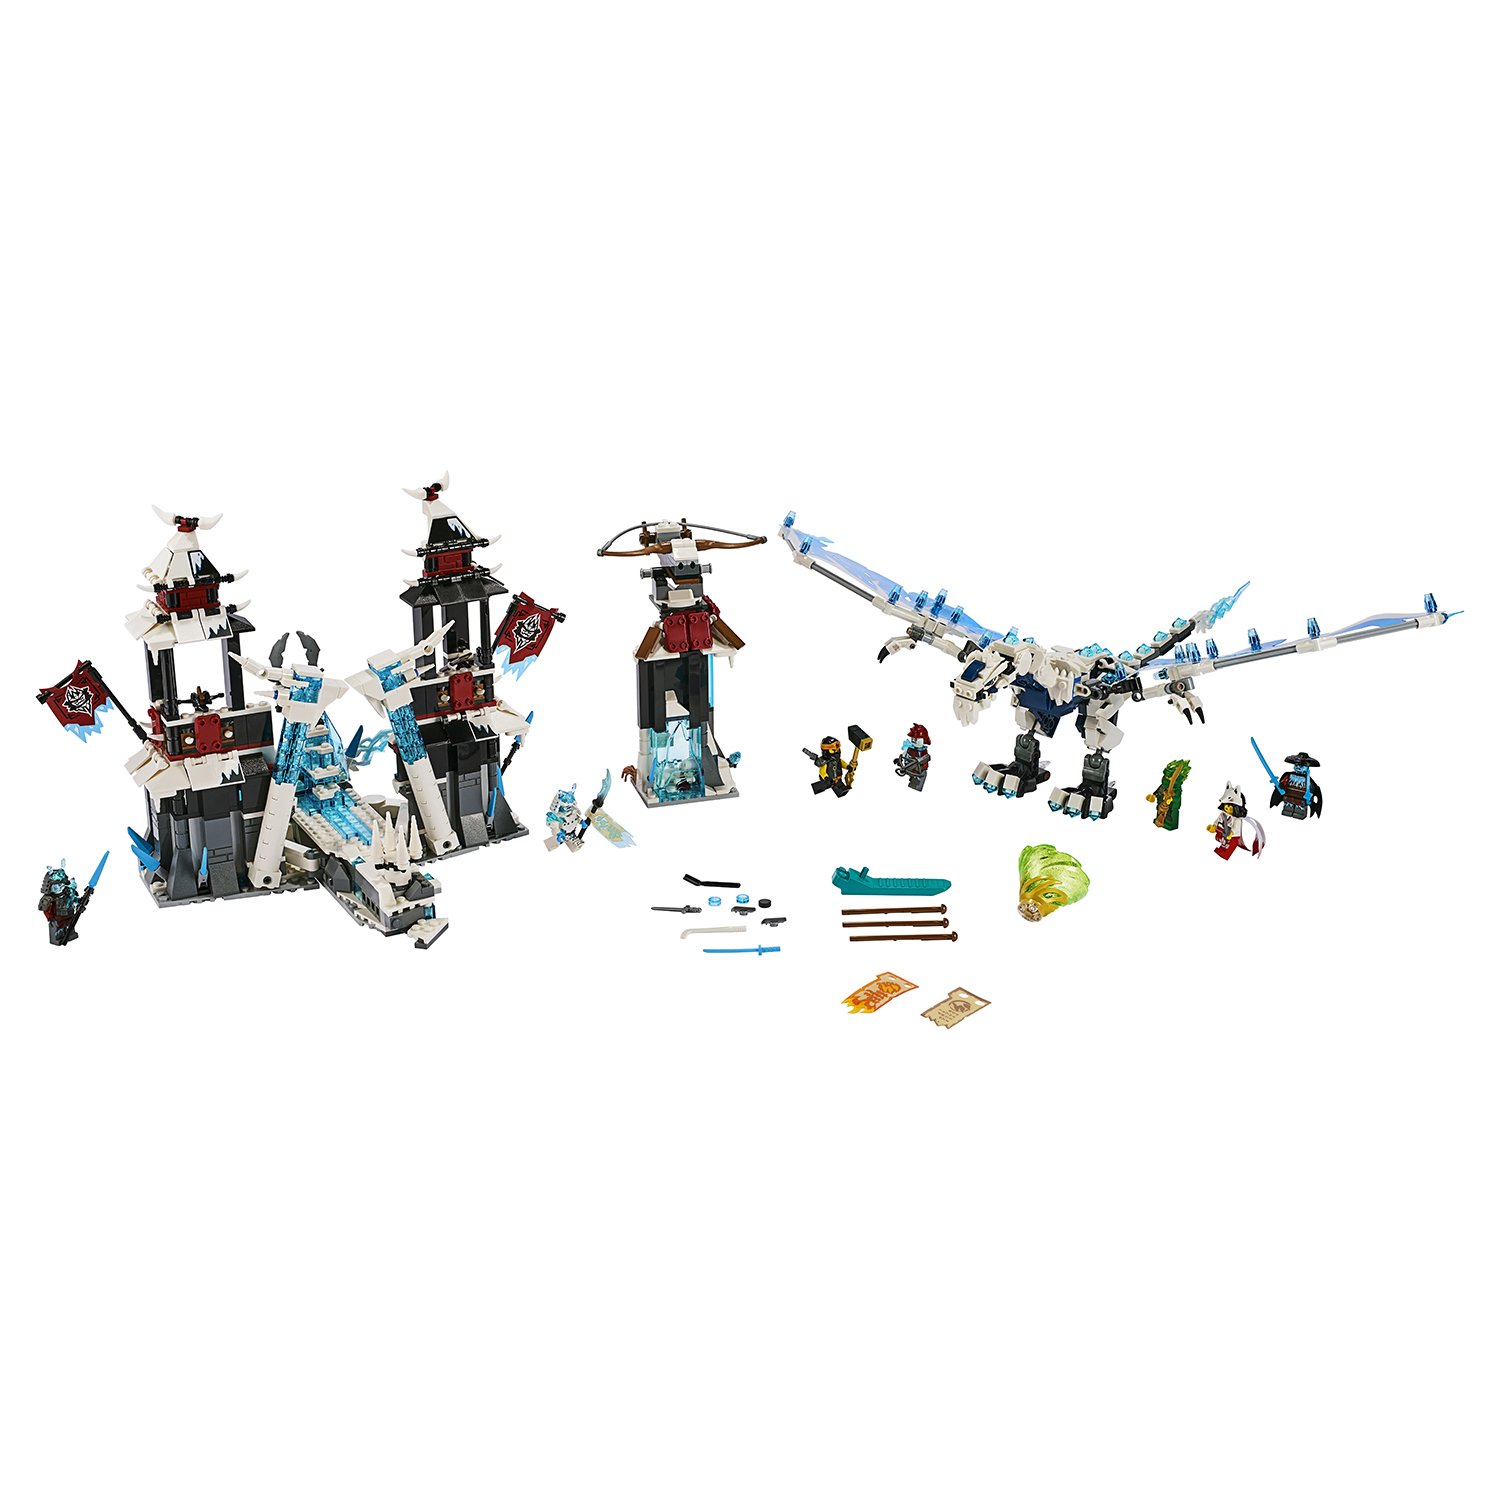 Lego Ninjago 70678 Замок проклятого императора